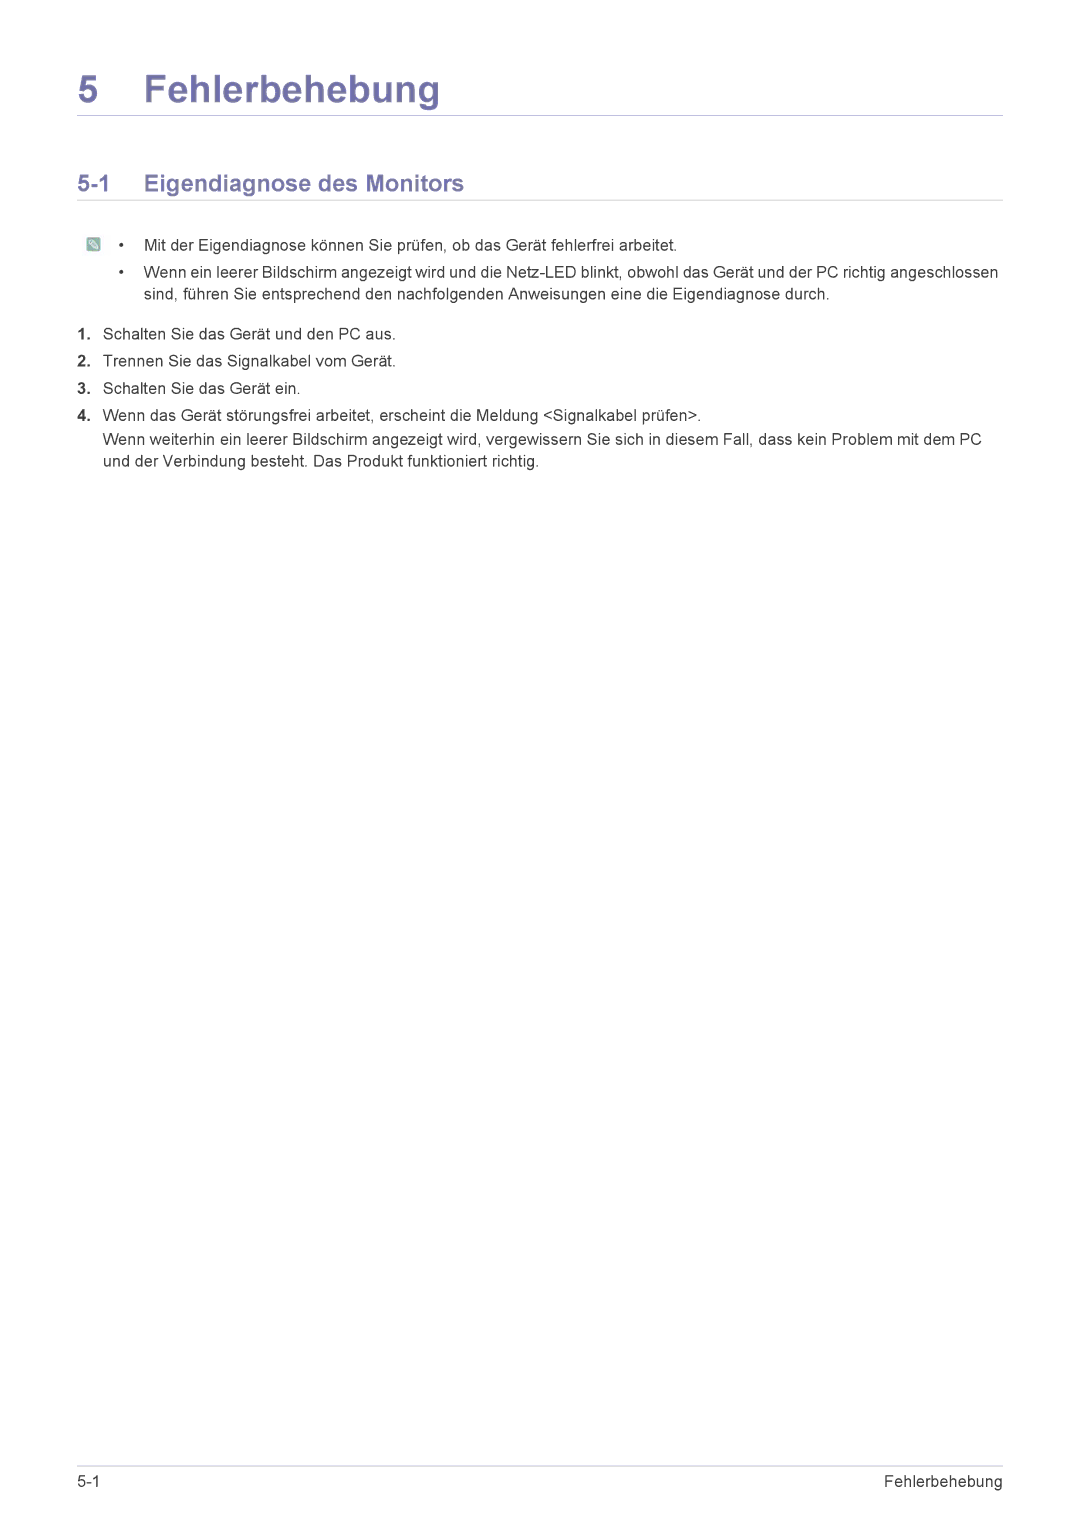 Samsung LS22MYPEBV/EN manual Fehlerbehebung, Eigendiagnose des Monitors 